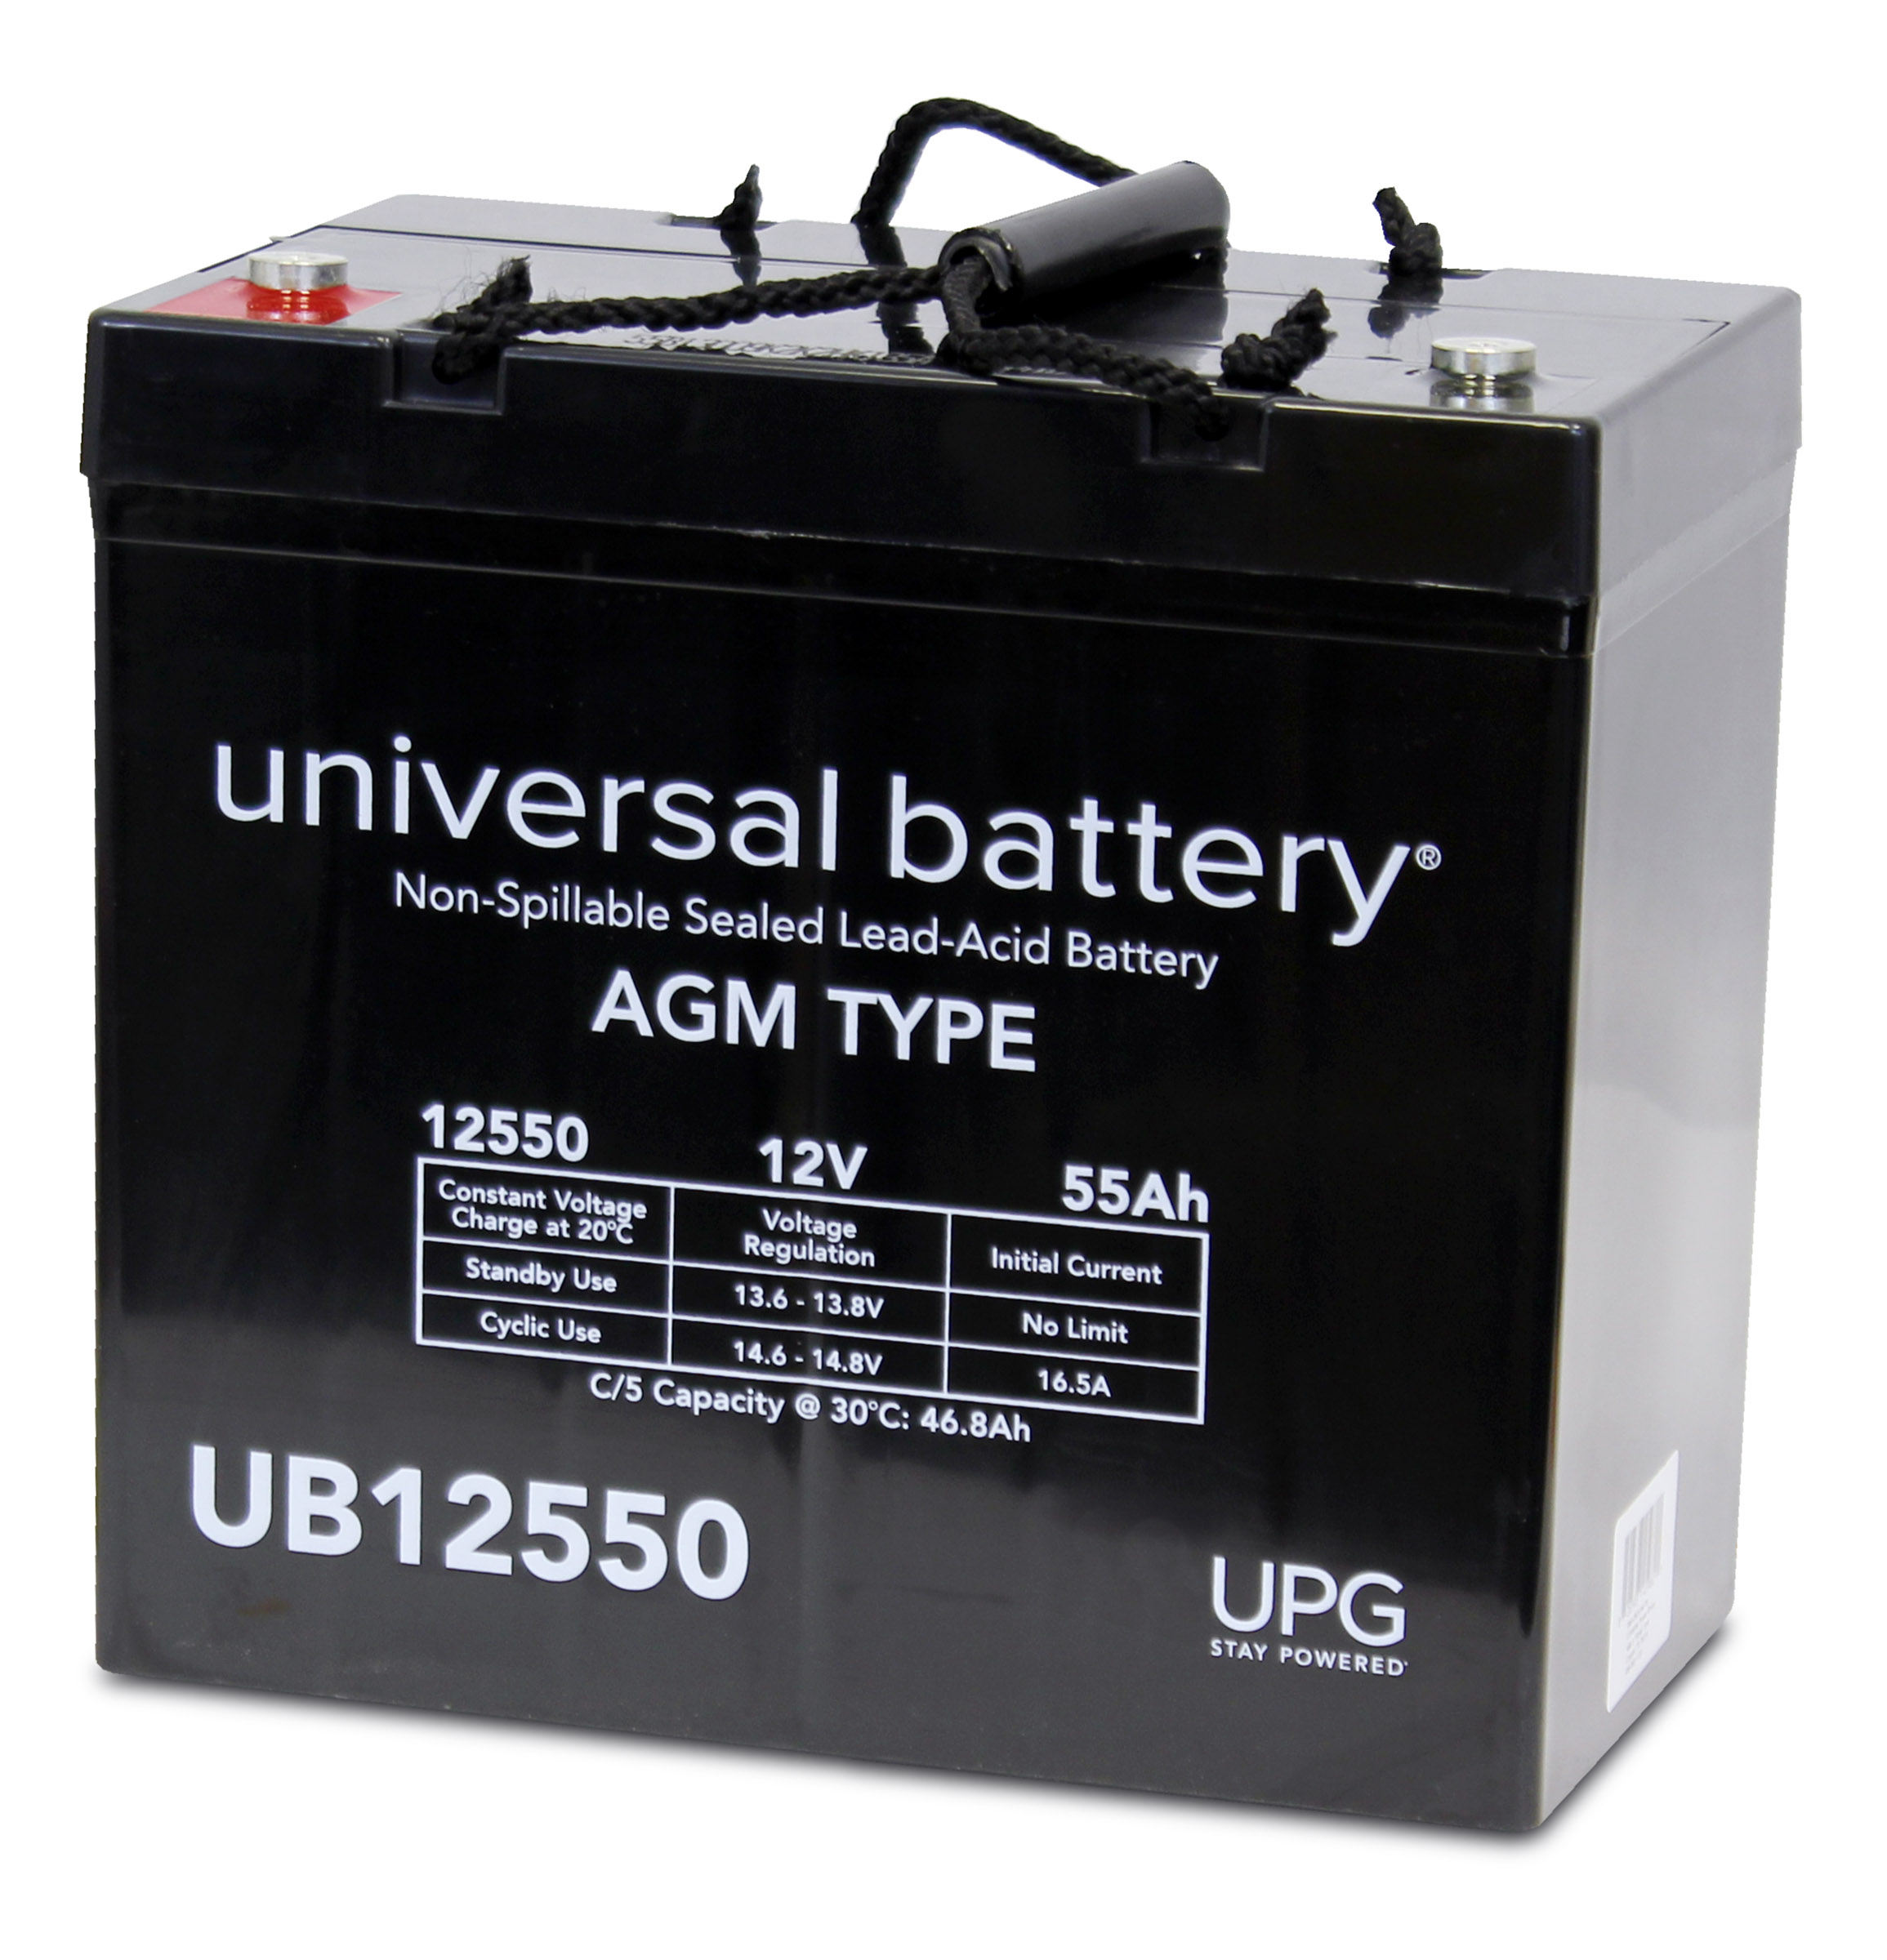 Sealed Lead Acid 12 Volt UPG UB1208 0.8 Ah Capacity AGM Battery WL ...